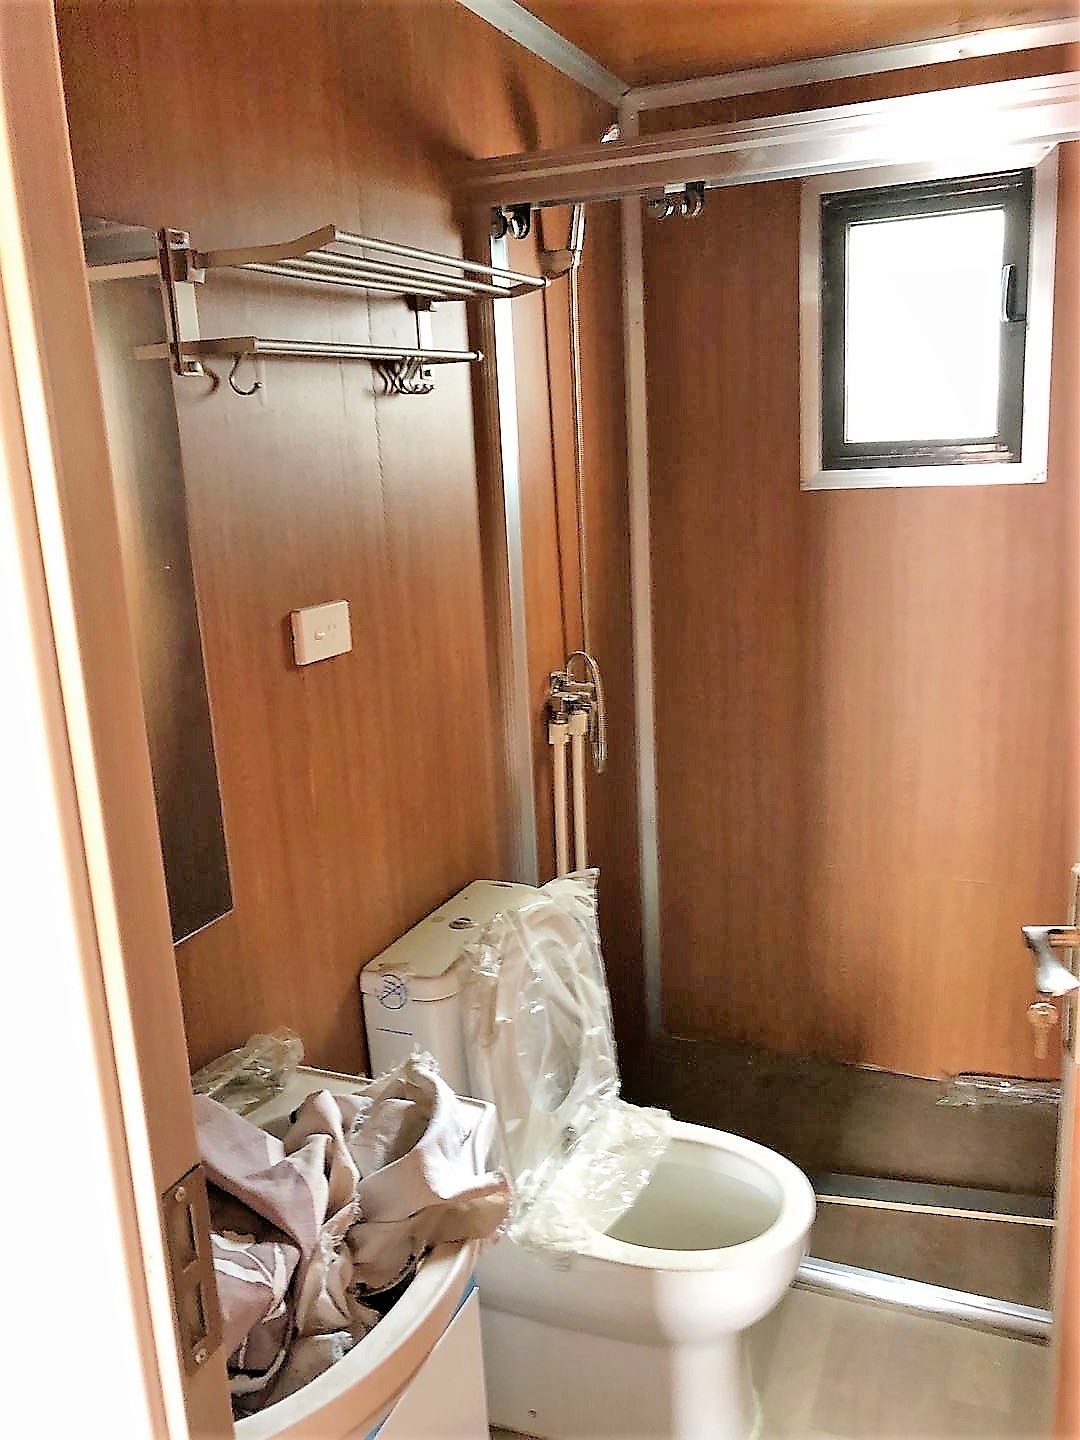 Bathroom trailer home from $45K